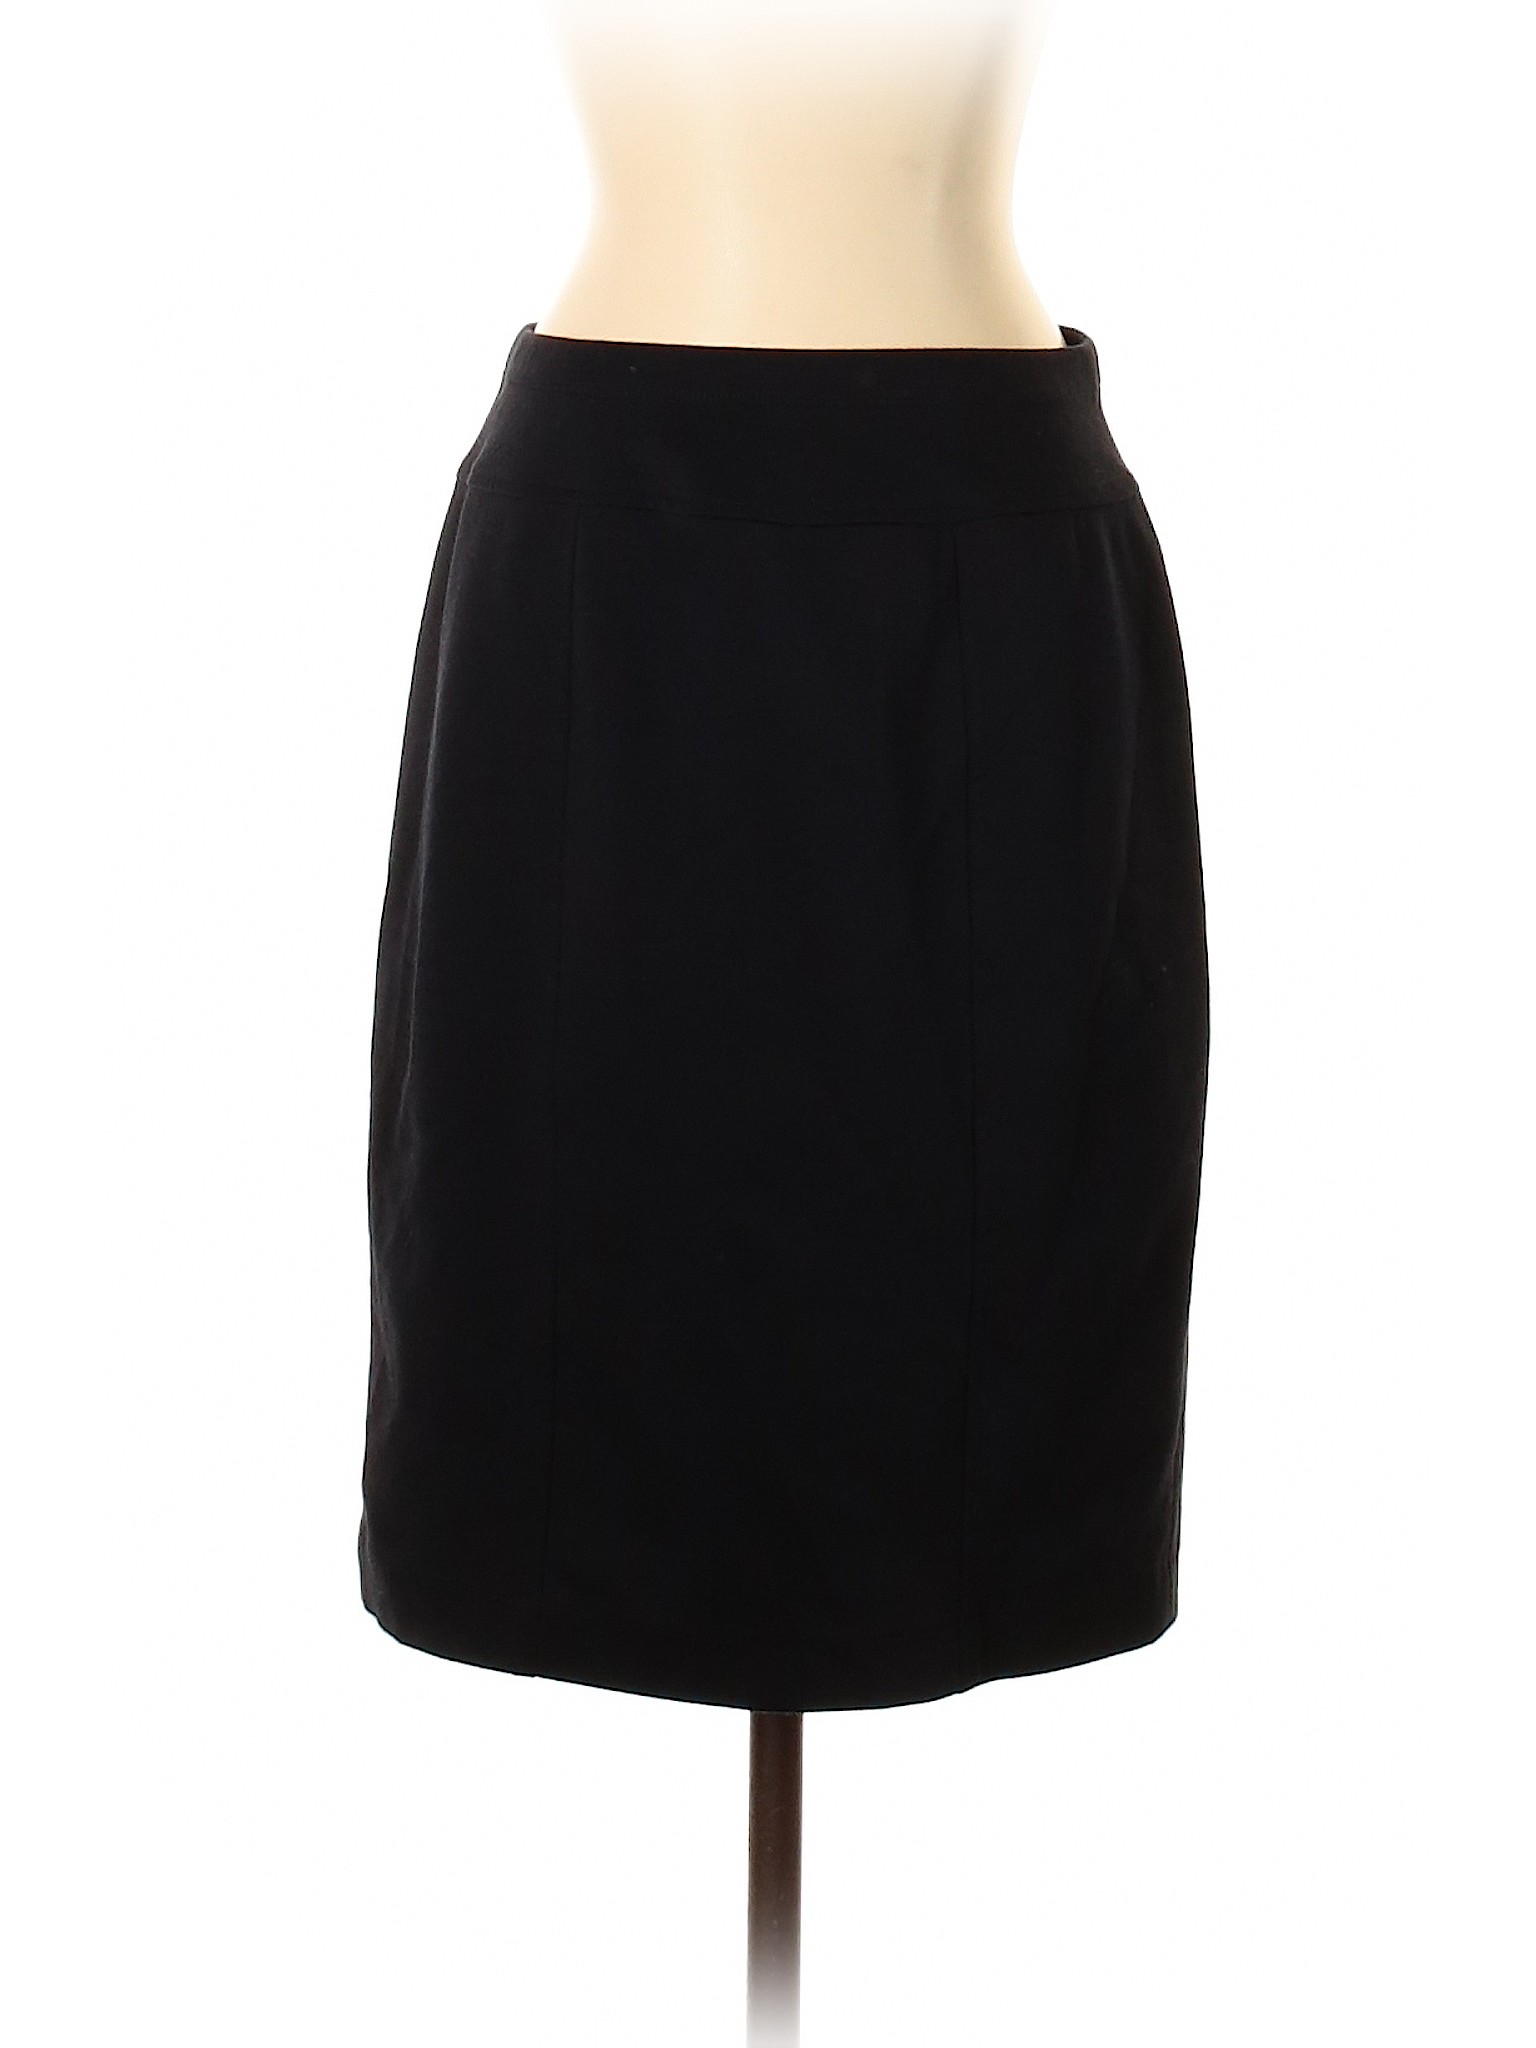 Ellen Tracy Women's Skirts On Sale Up To 90% Off Retail | thredUP